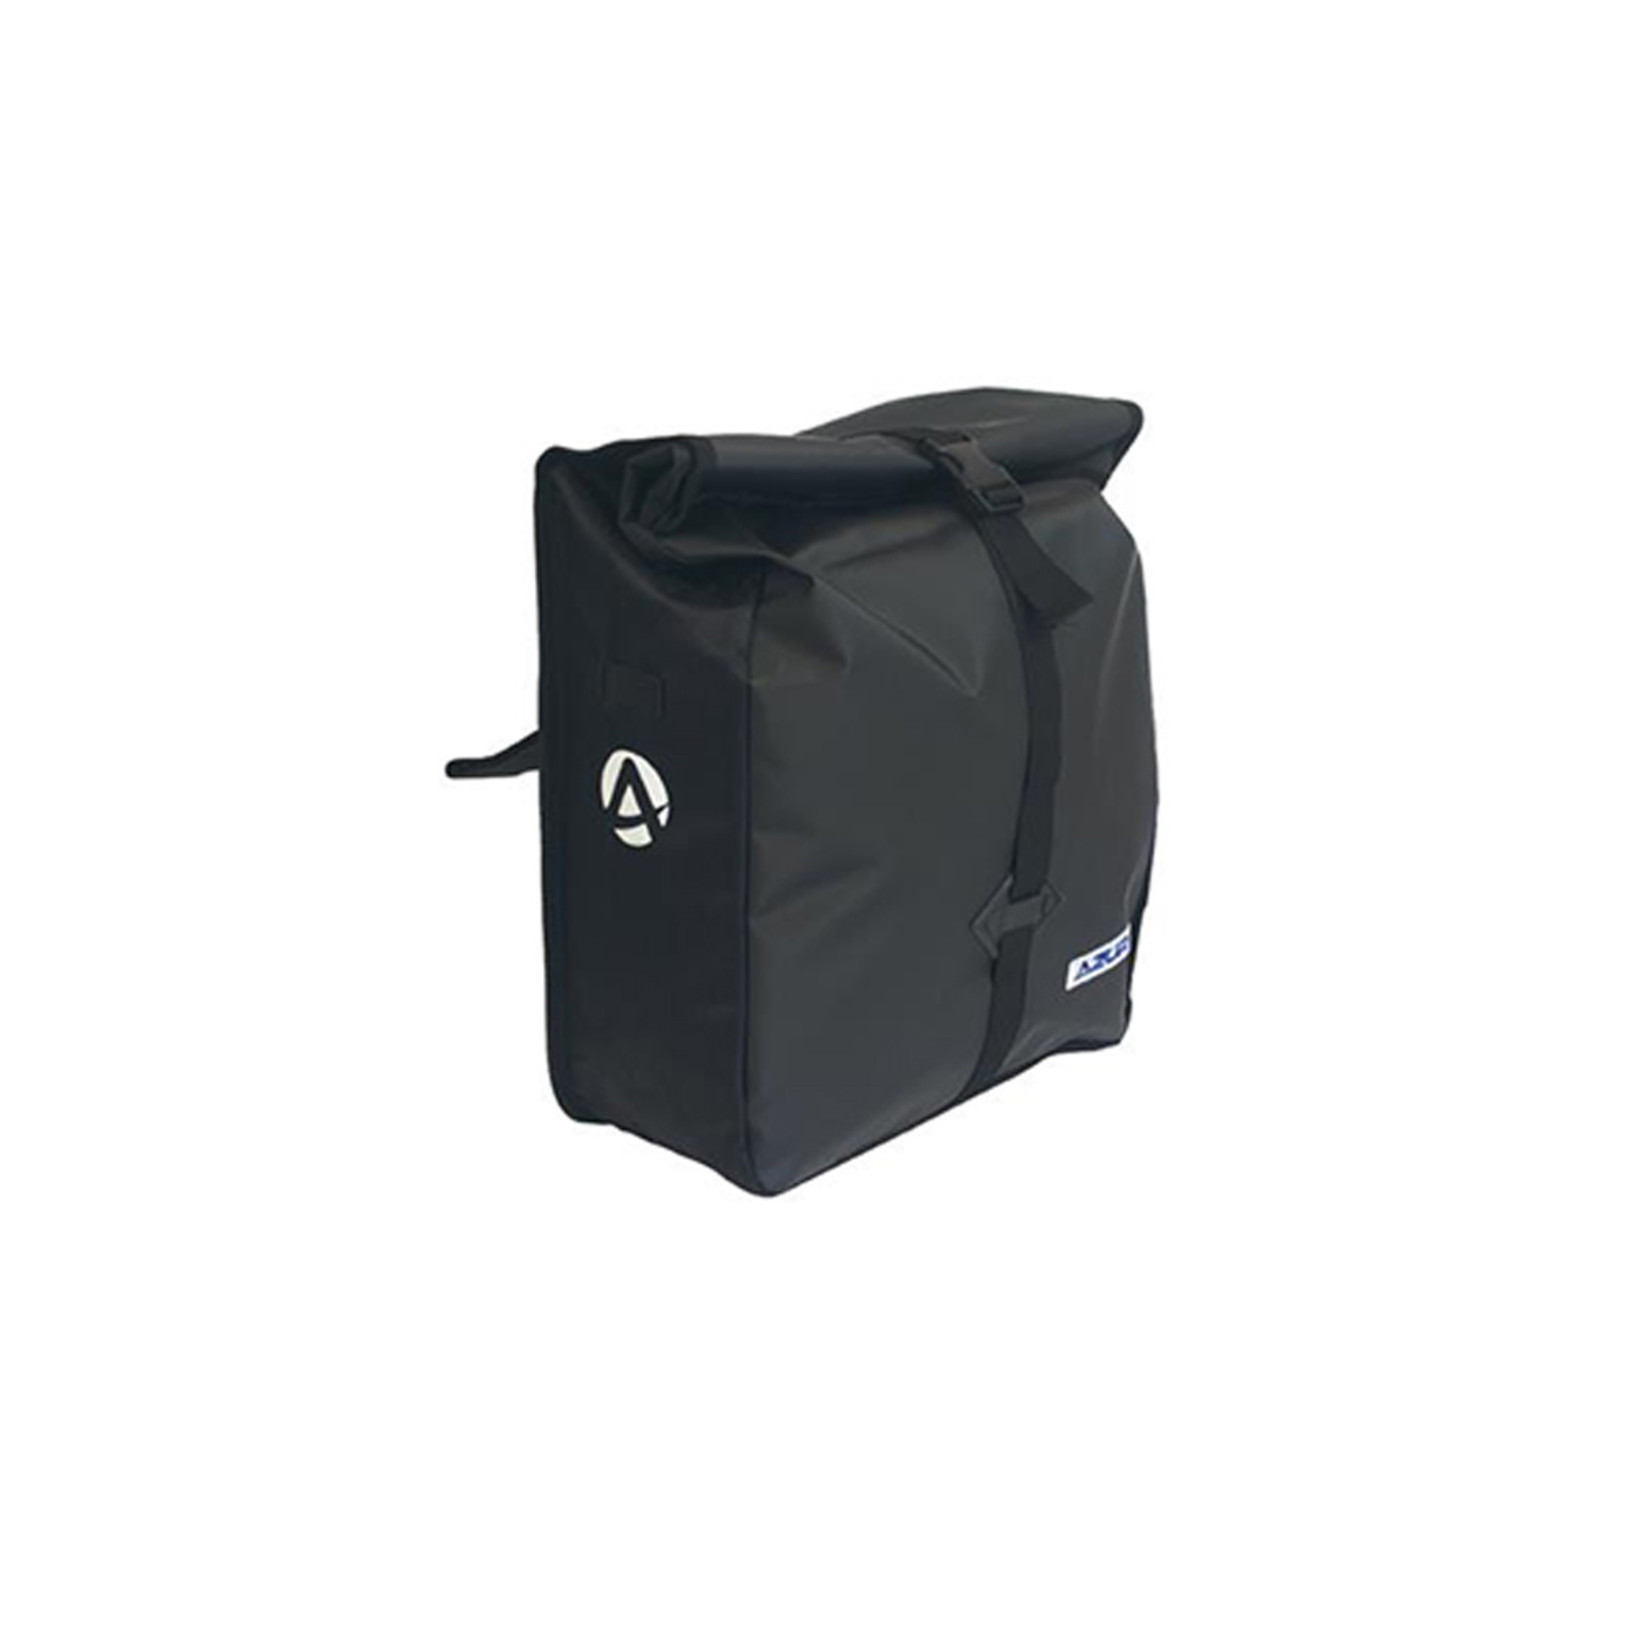 Azur Azur Bike/Cycling Metro Pannier Bag - Black (Pair) Waterproof Polyester